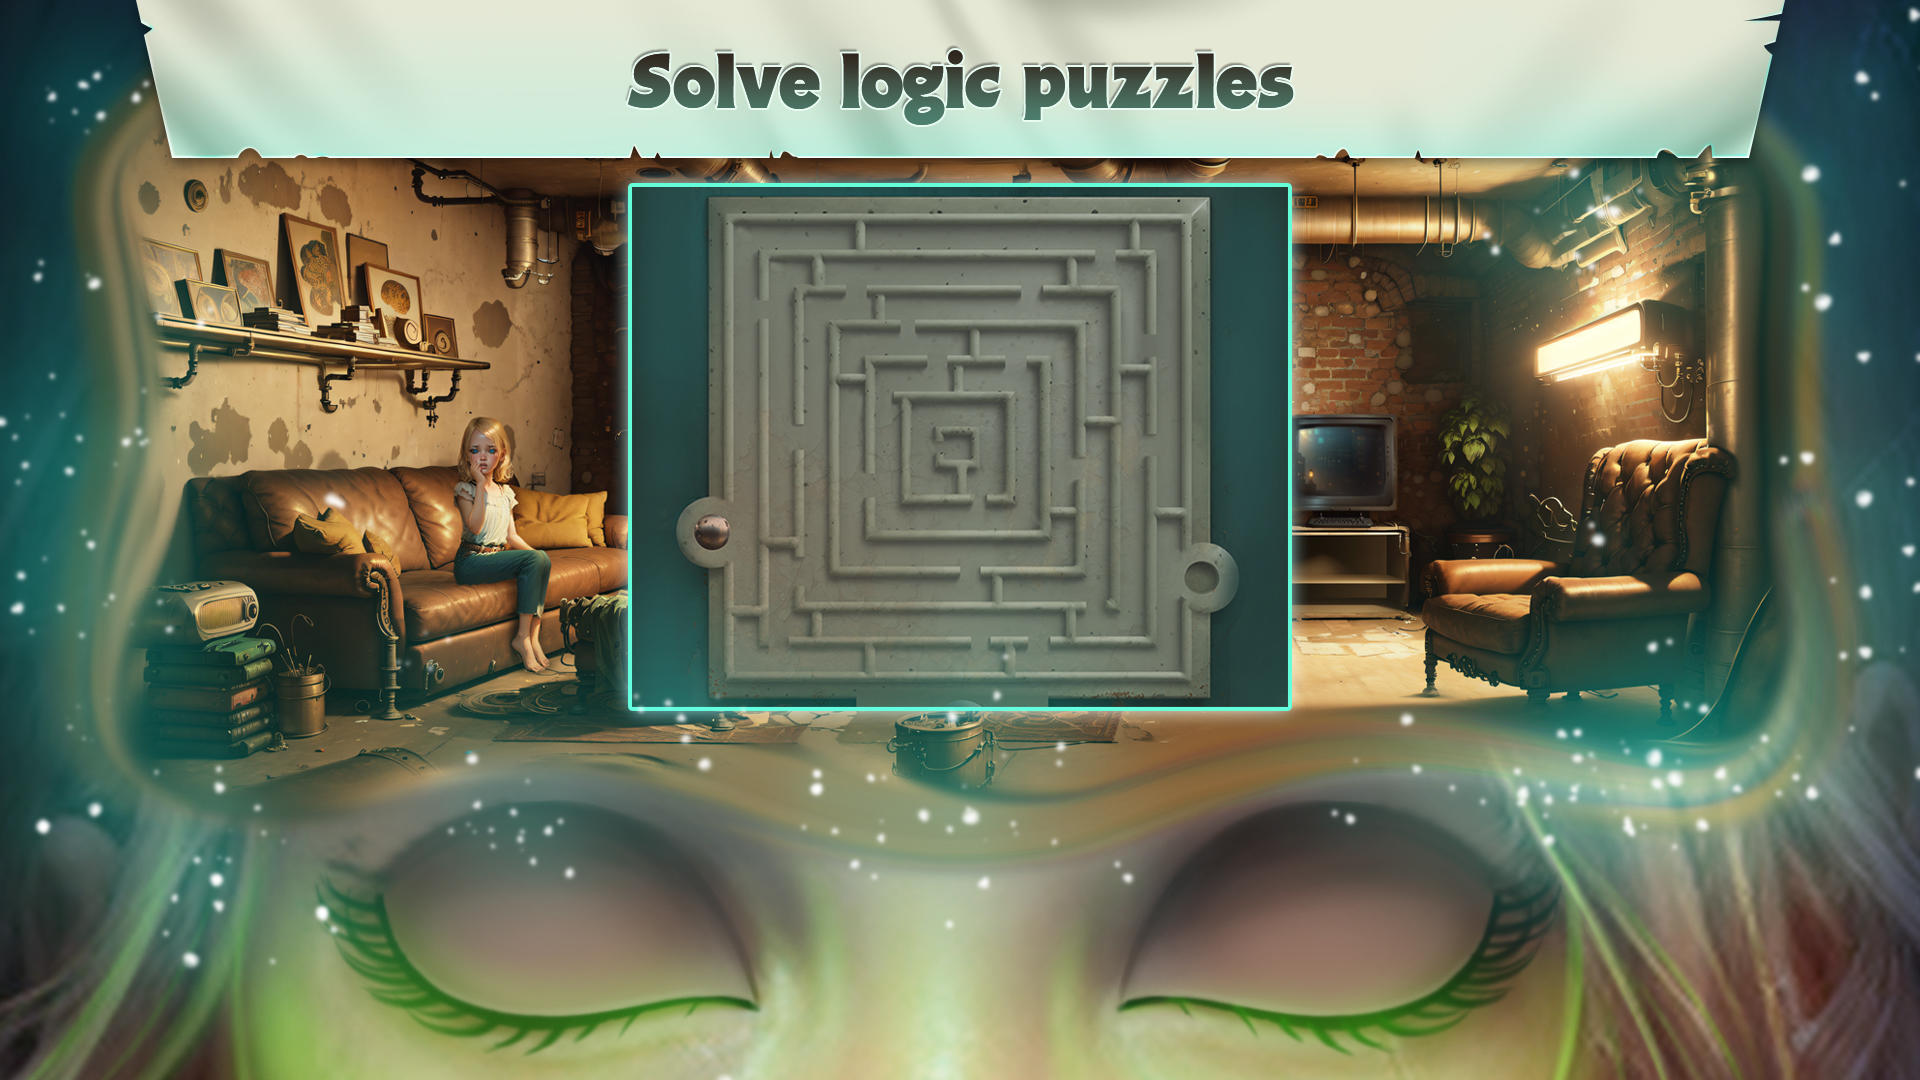 Patient X: Room Escape Puzzle ภาพหน้าจอเกม